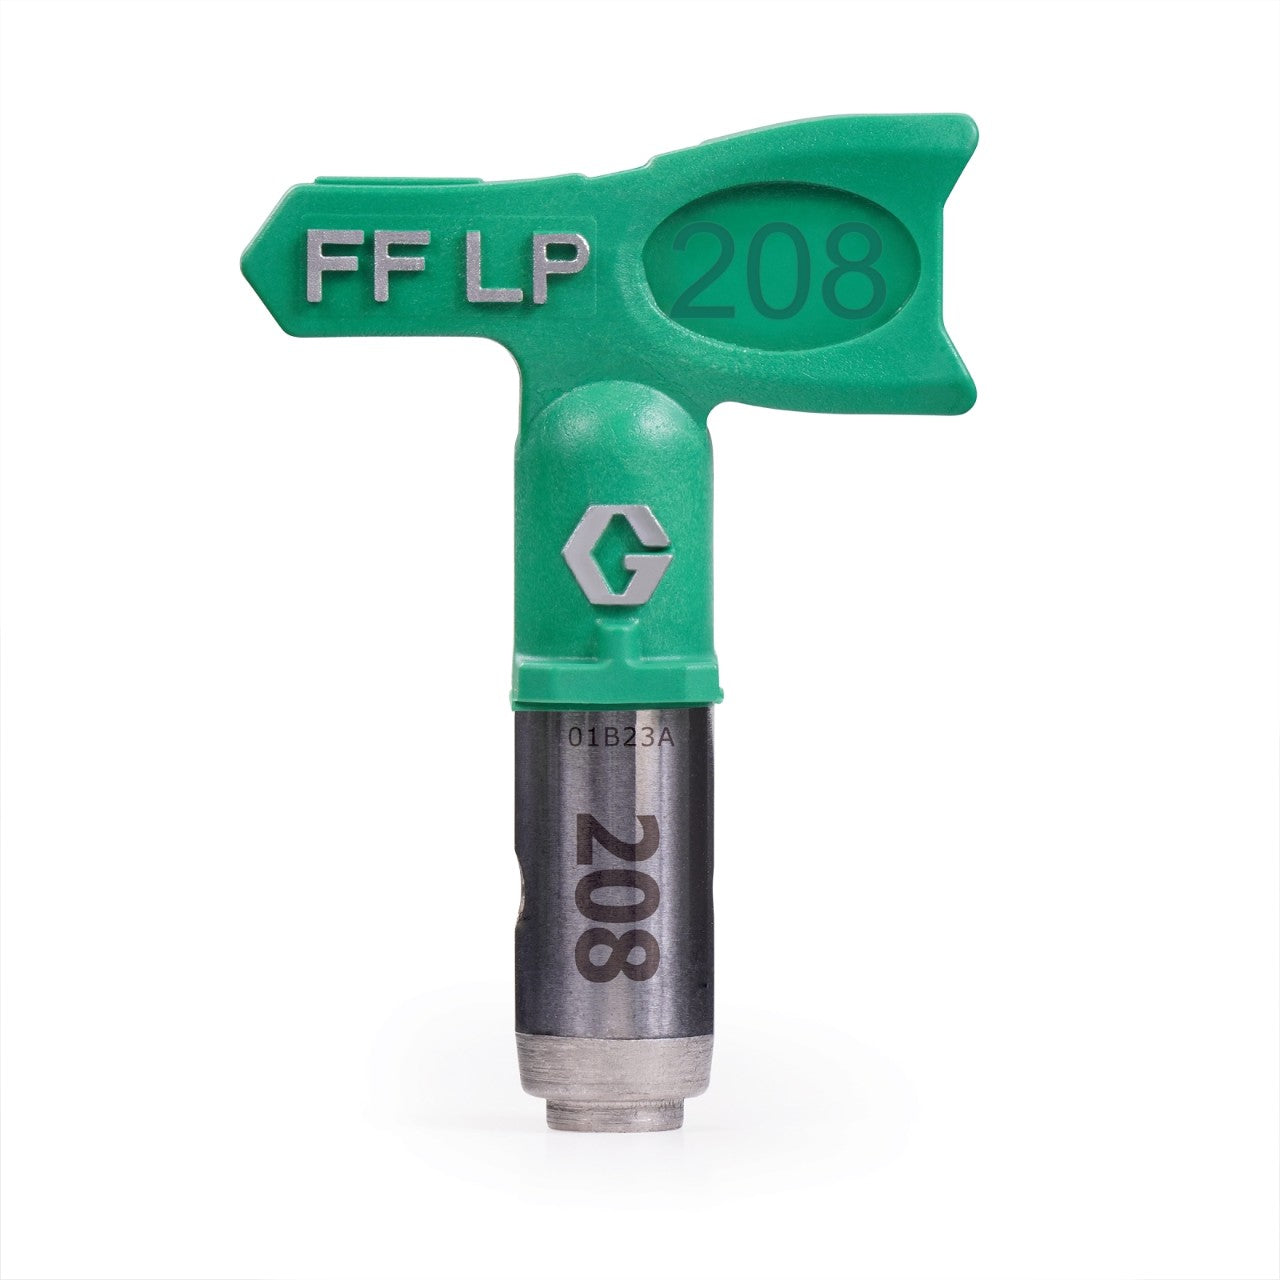 Graco FFLP-208 Tip